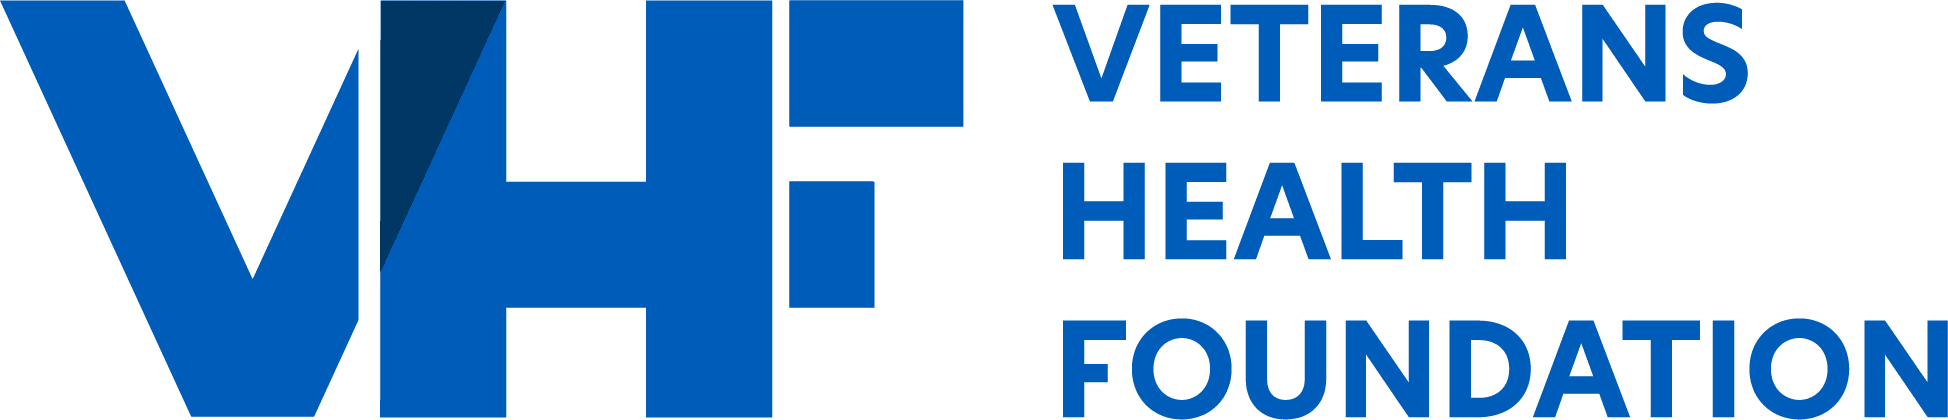 Veterans Health Foundation